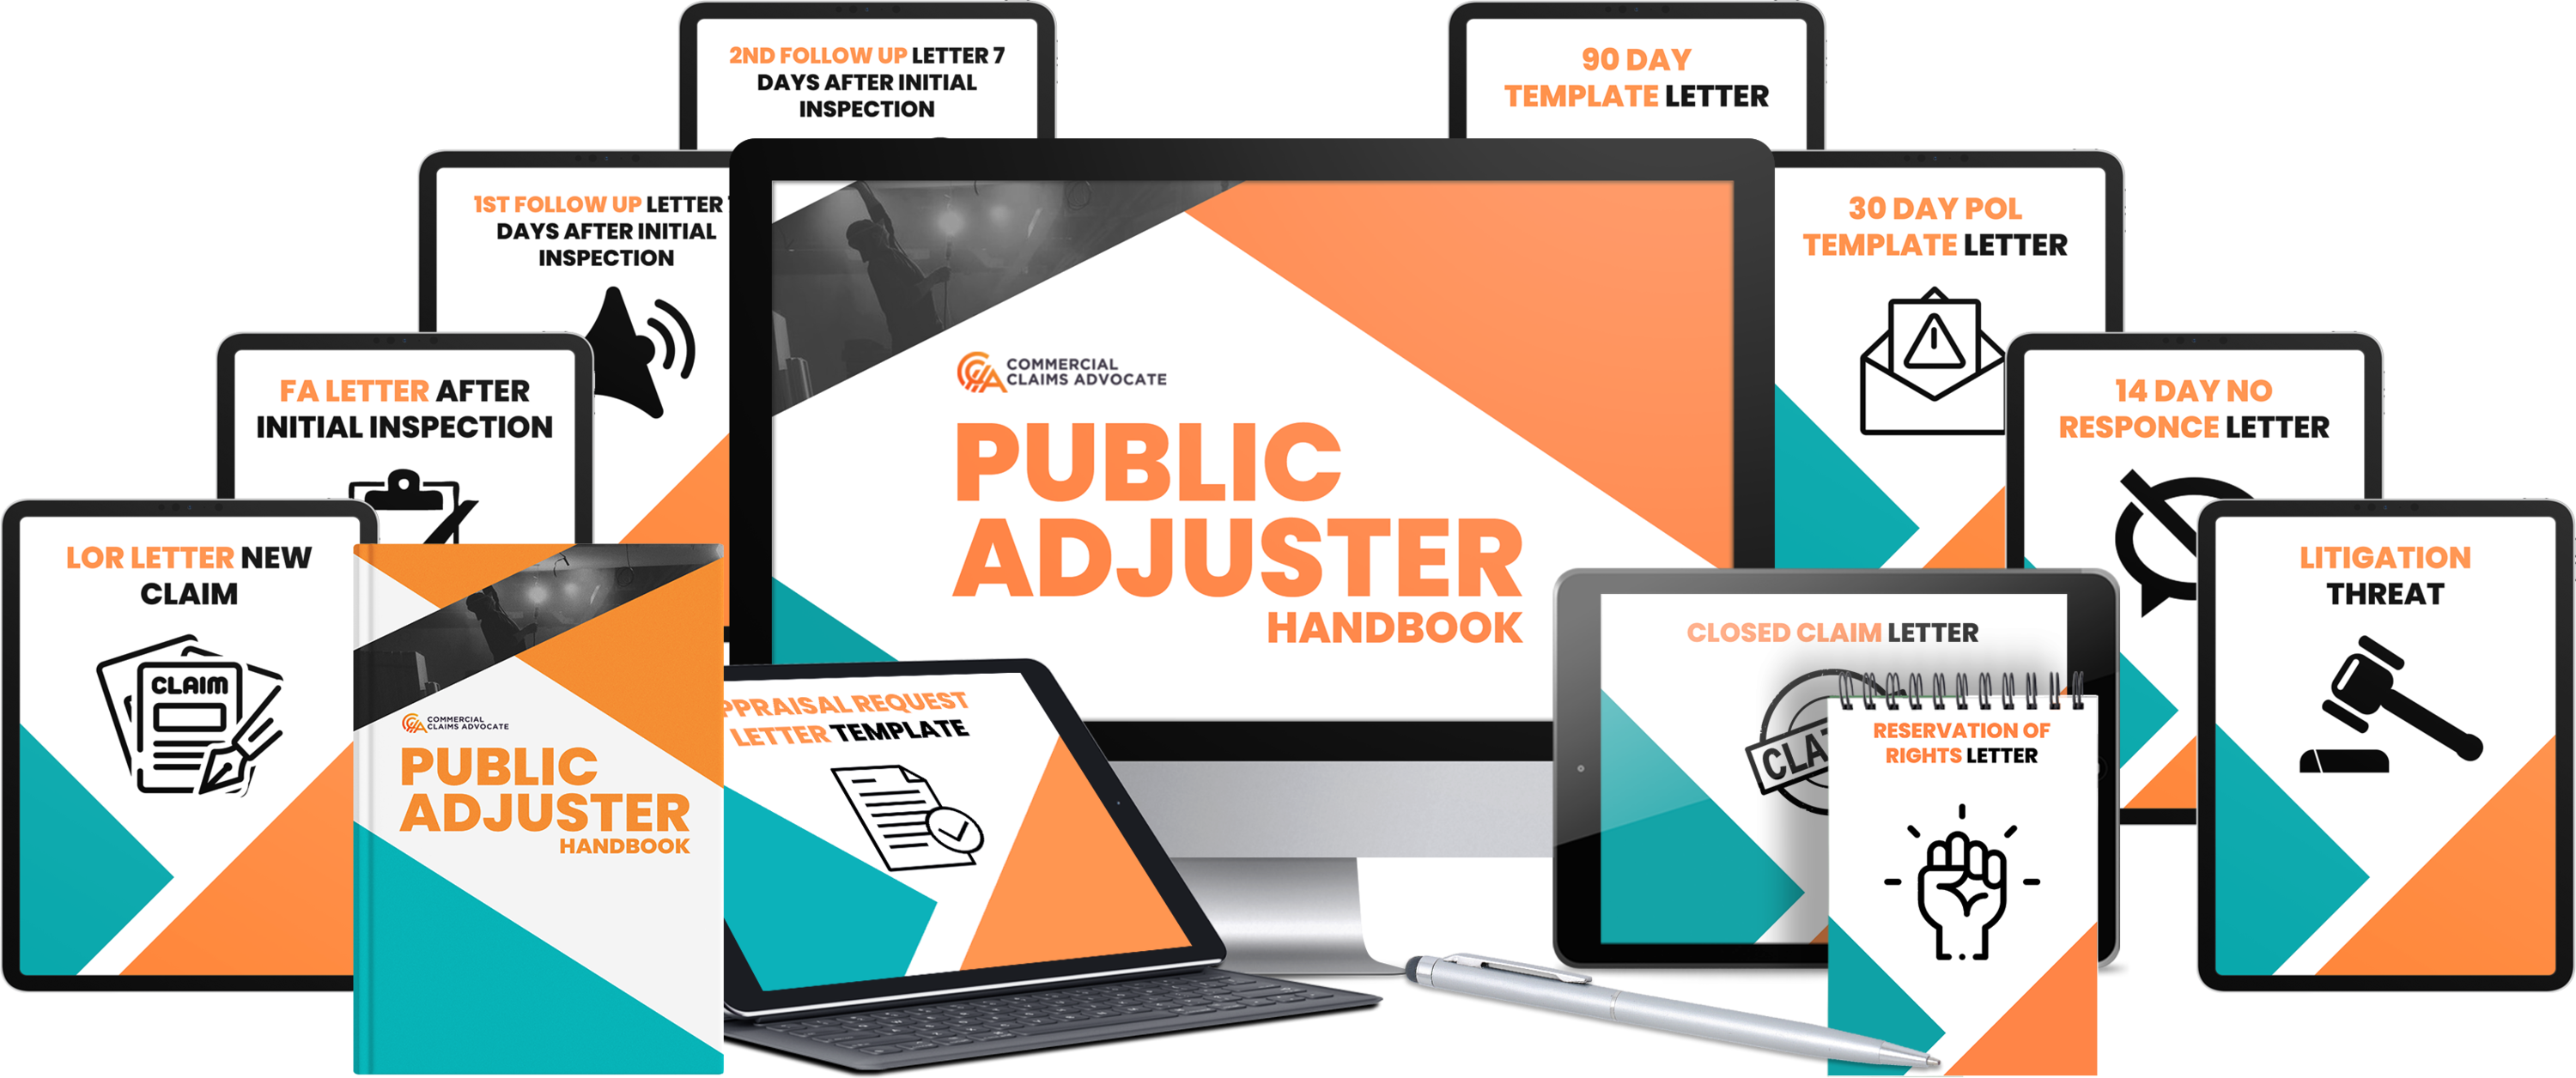 Commercial Claims Advocates Public Adjuster Handbook 7881